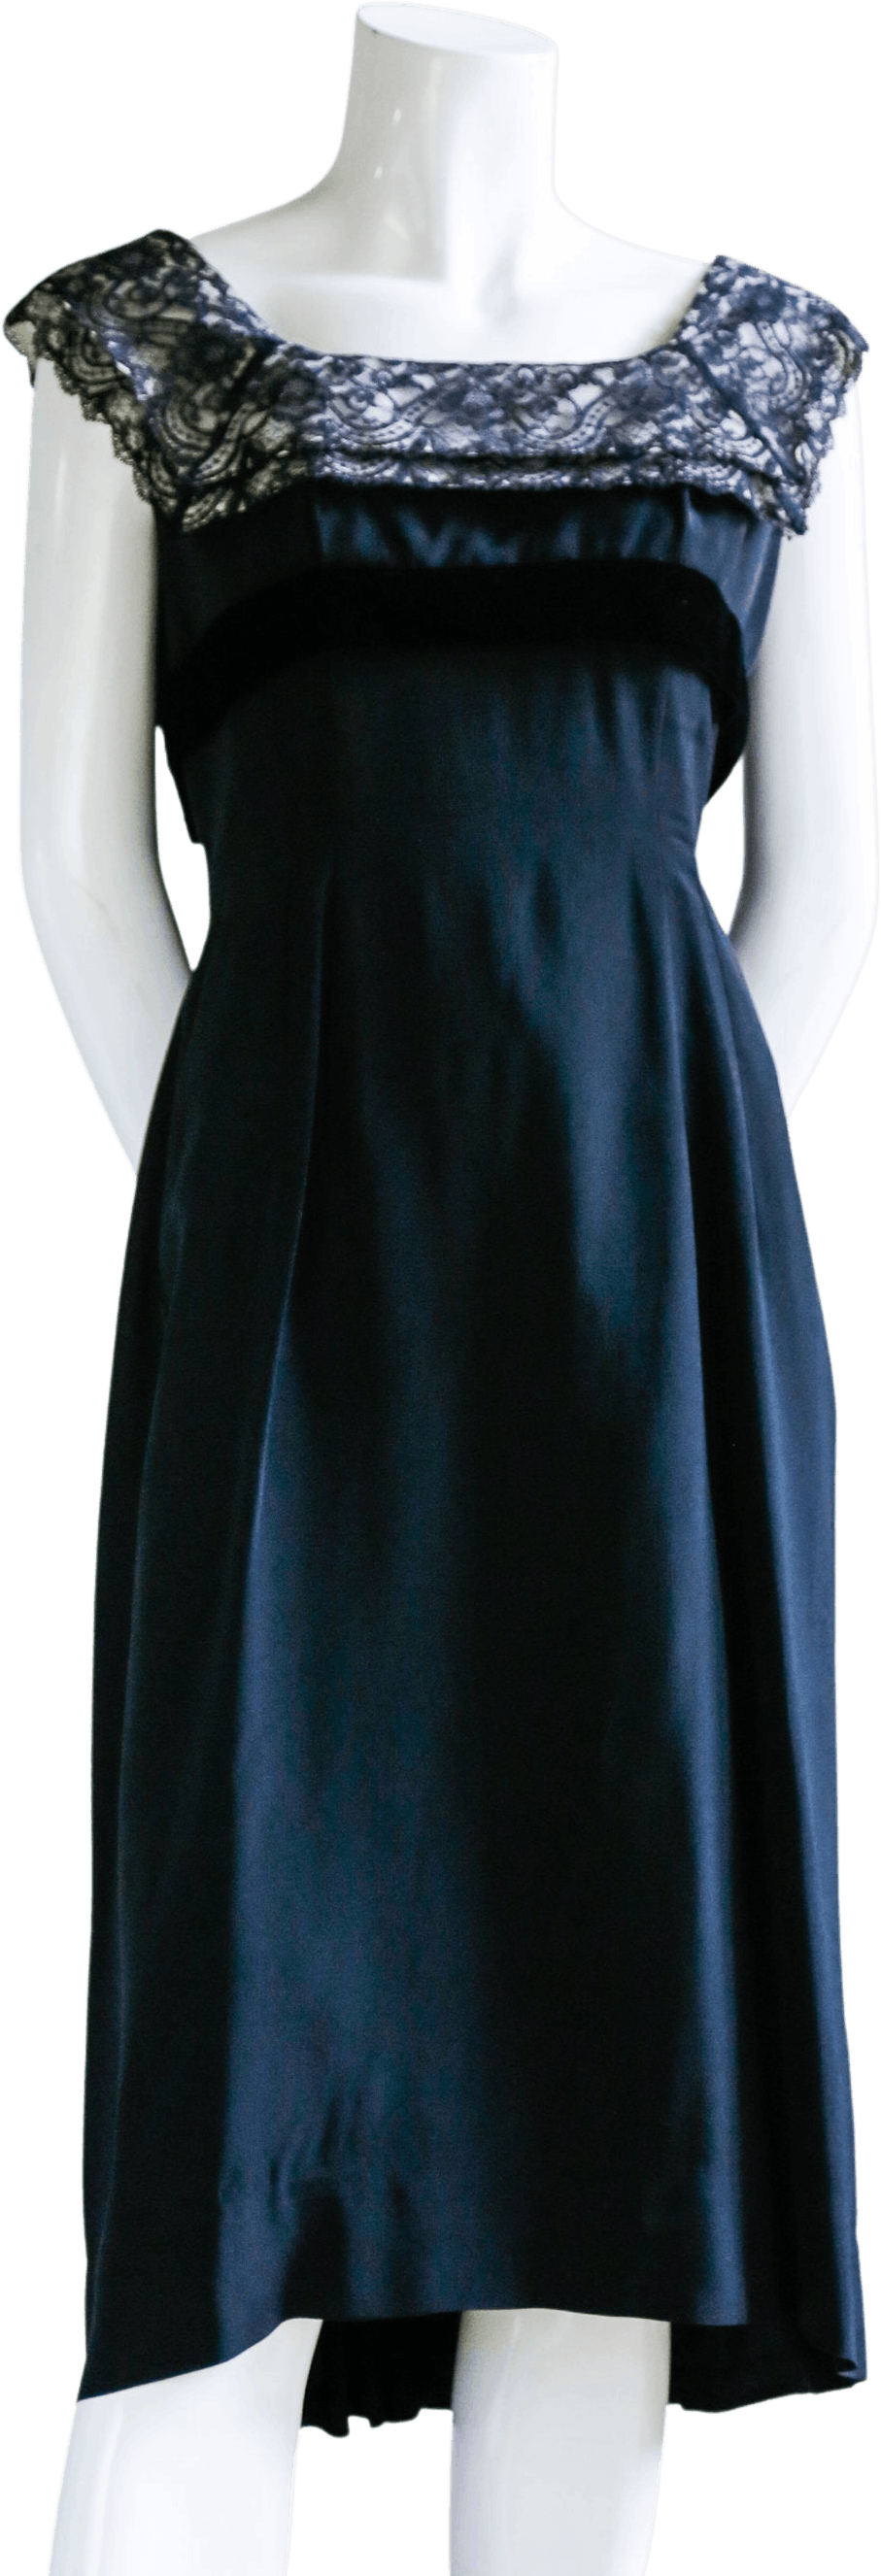 Vintage Little Black Dress with Lace Neckline | Shop THRILLING